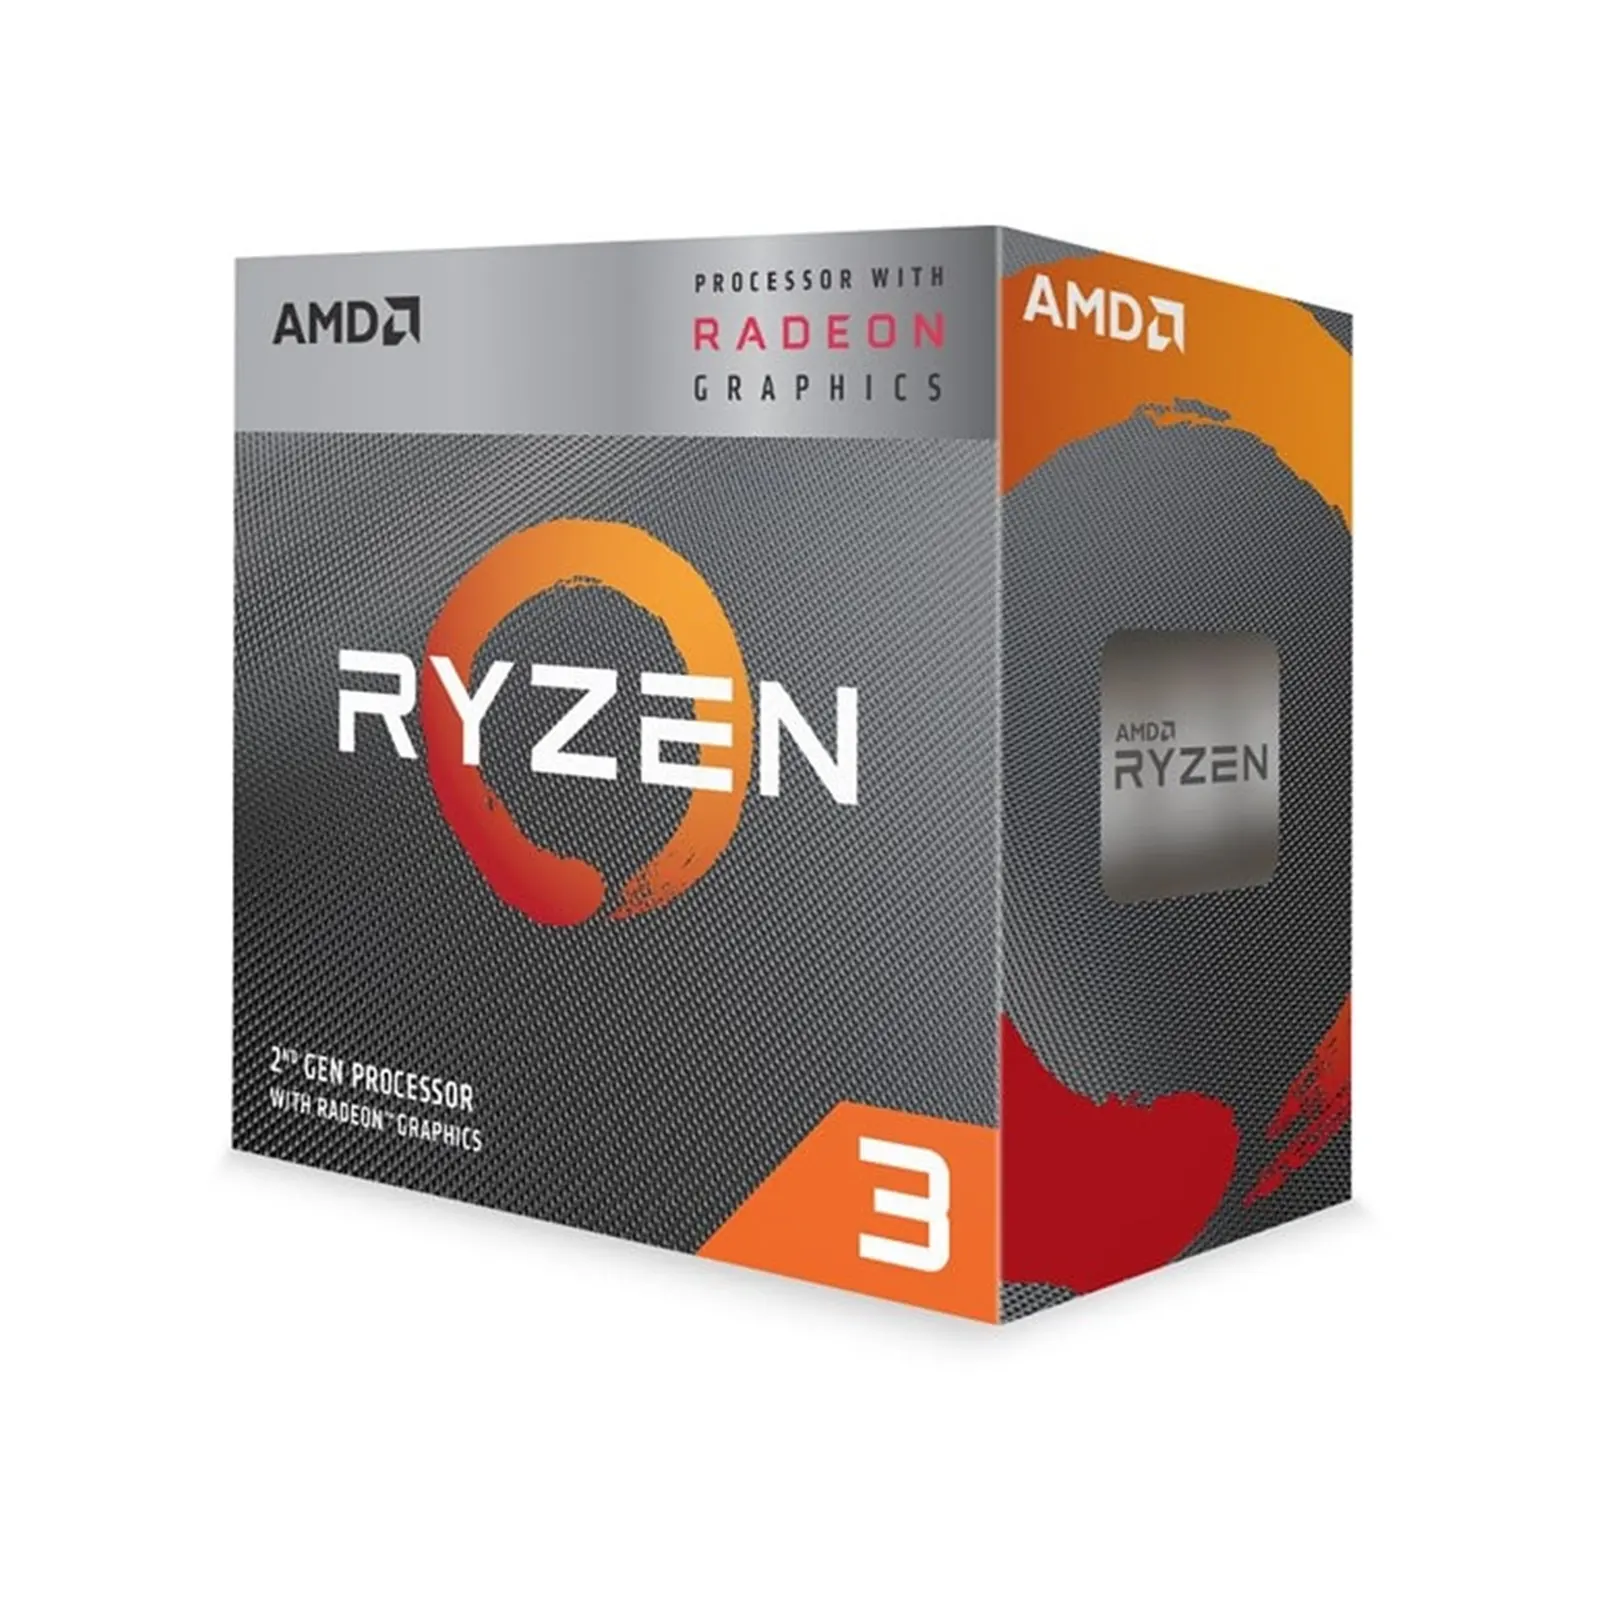 AMD Ryzen 3 3200G 3.6GHz 4 Core AM4 Processor, 4 Threads, 4.0GHz Boost, Radeon Vega 8 Graphics